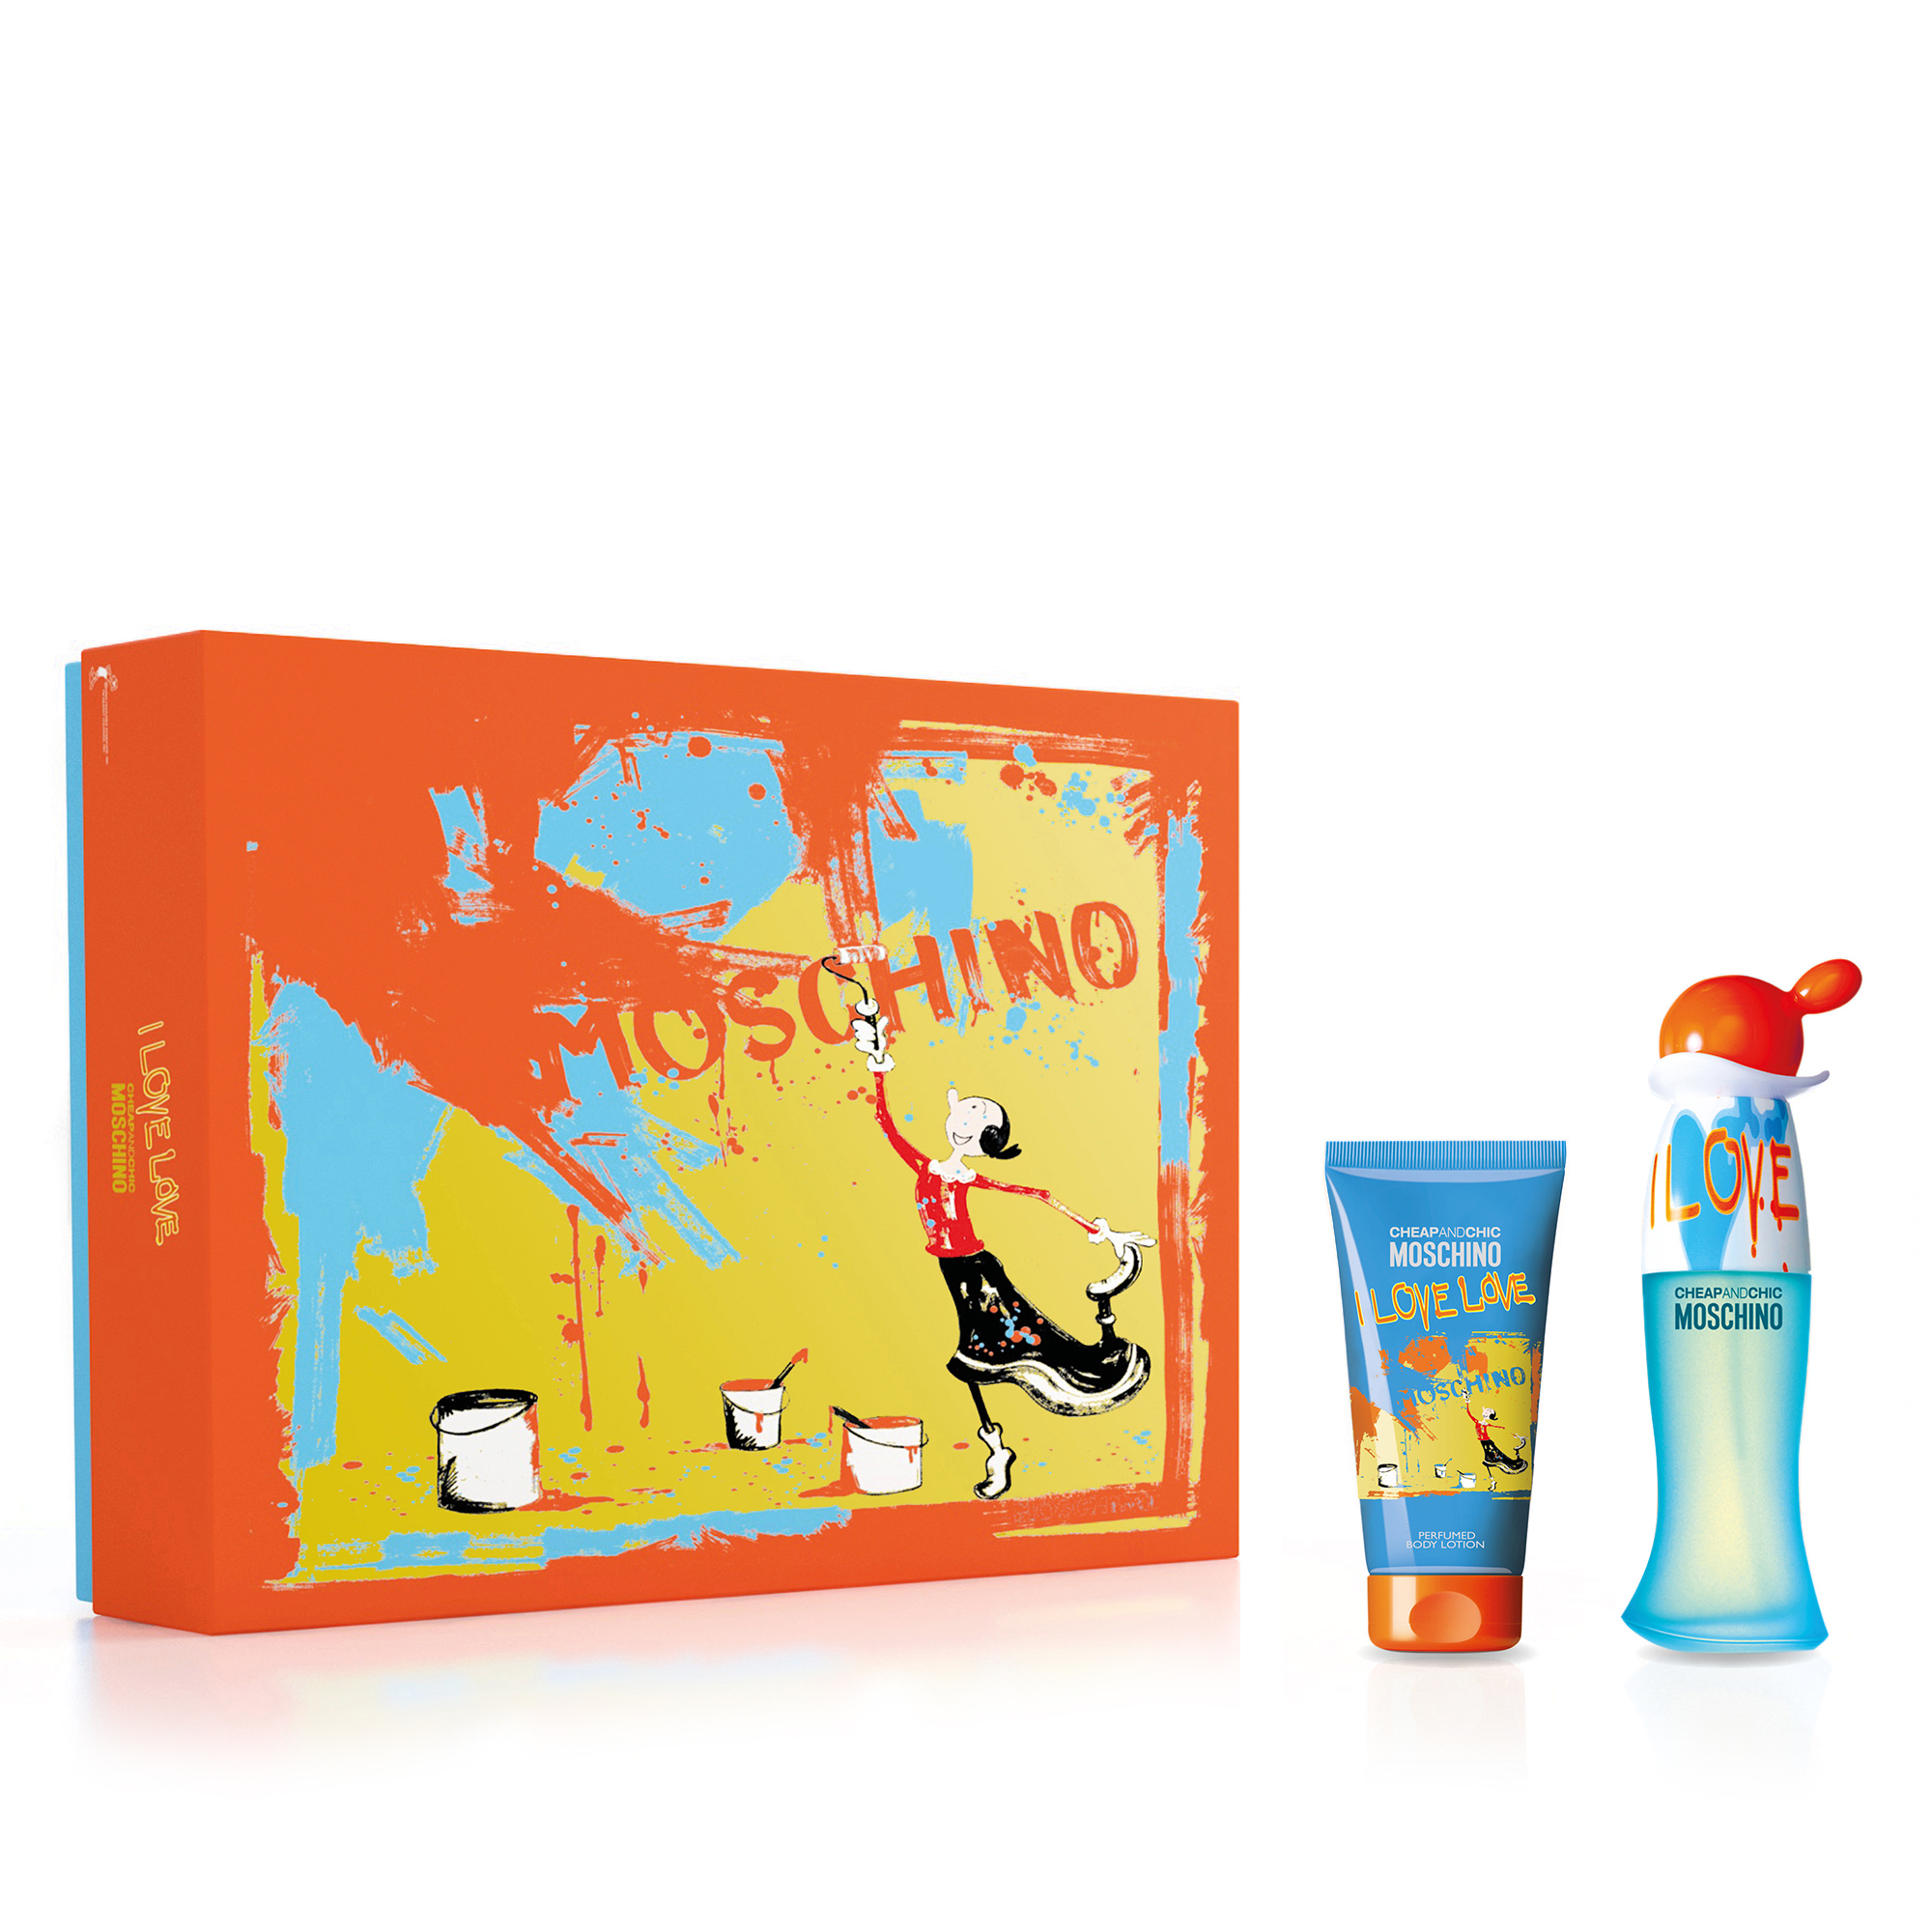 Moschino I Love Love EDT 30ml Gift Set